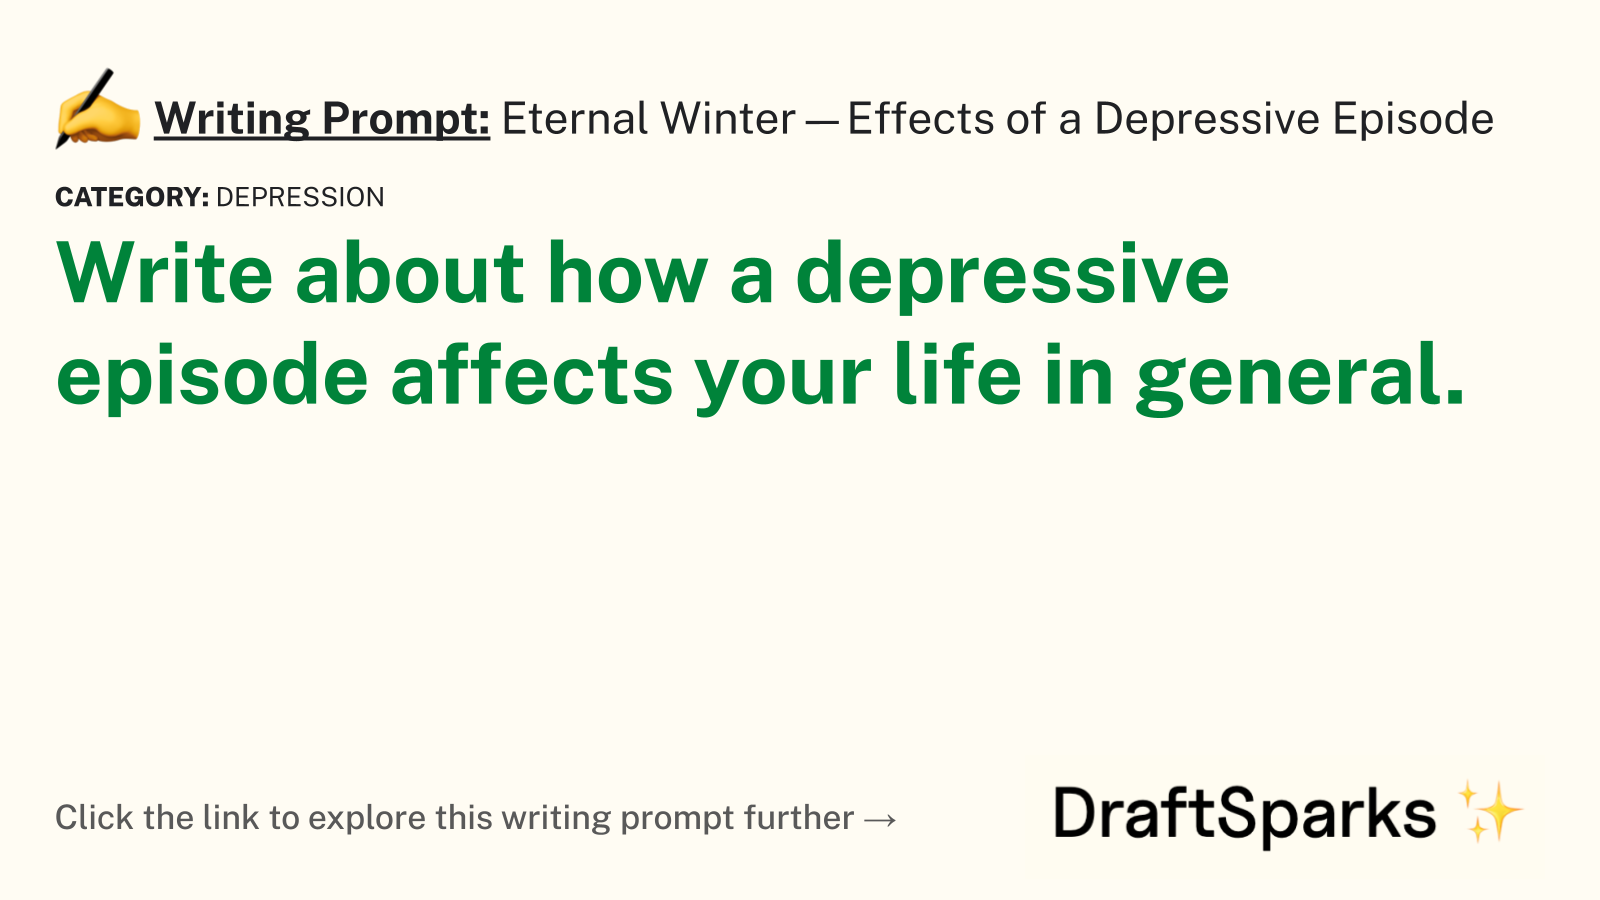 Eternal Winter—Effects of a Depressive Episode